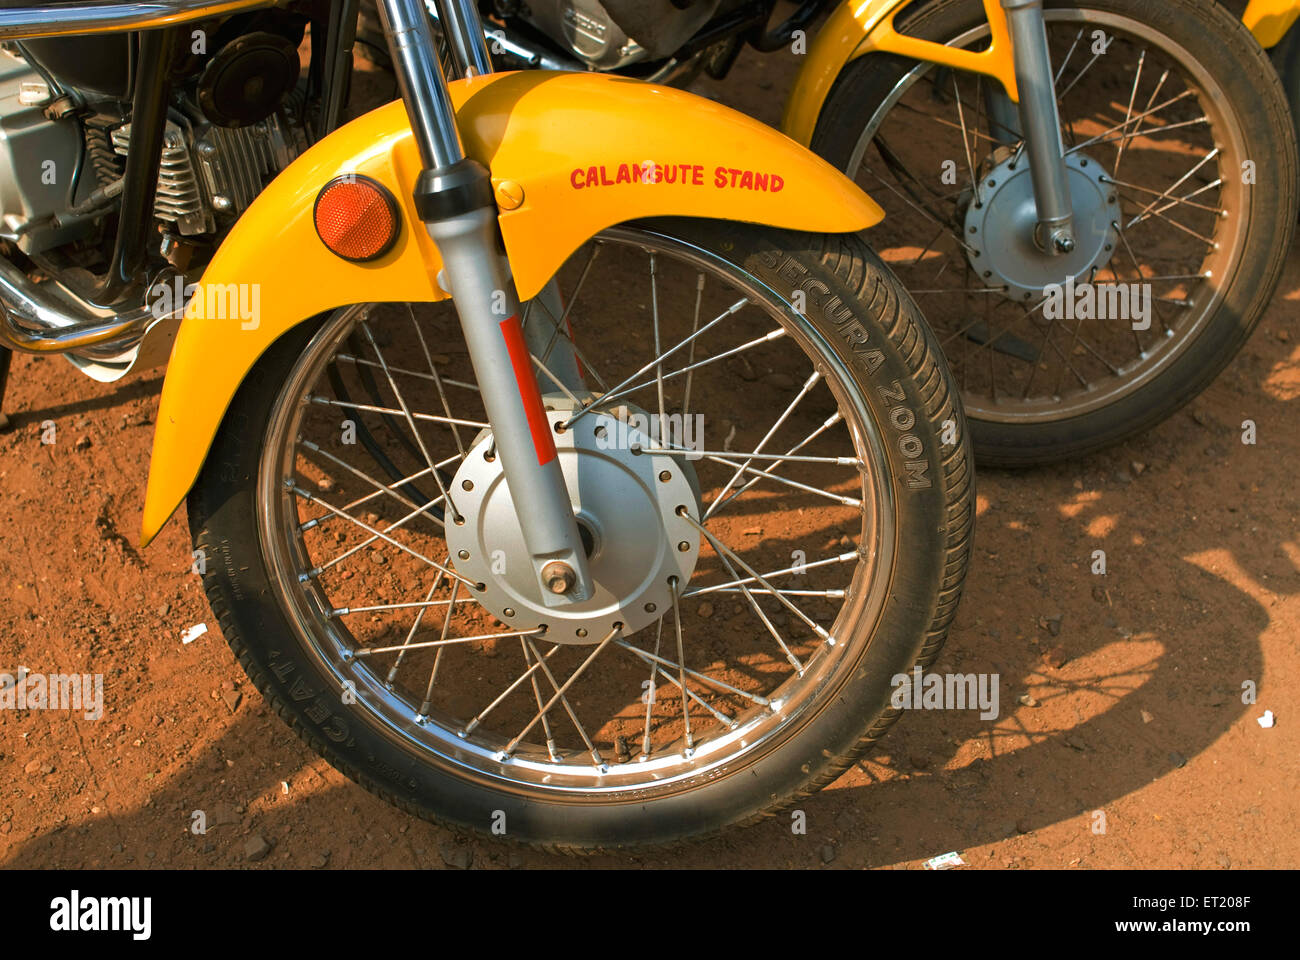 Pneumatico per bici, supporto per bici da spiaggia Calangute, Panjim, Panaji, Goa, India, Asia Foto Stock